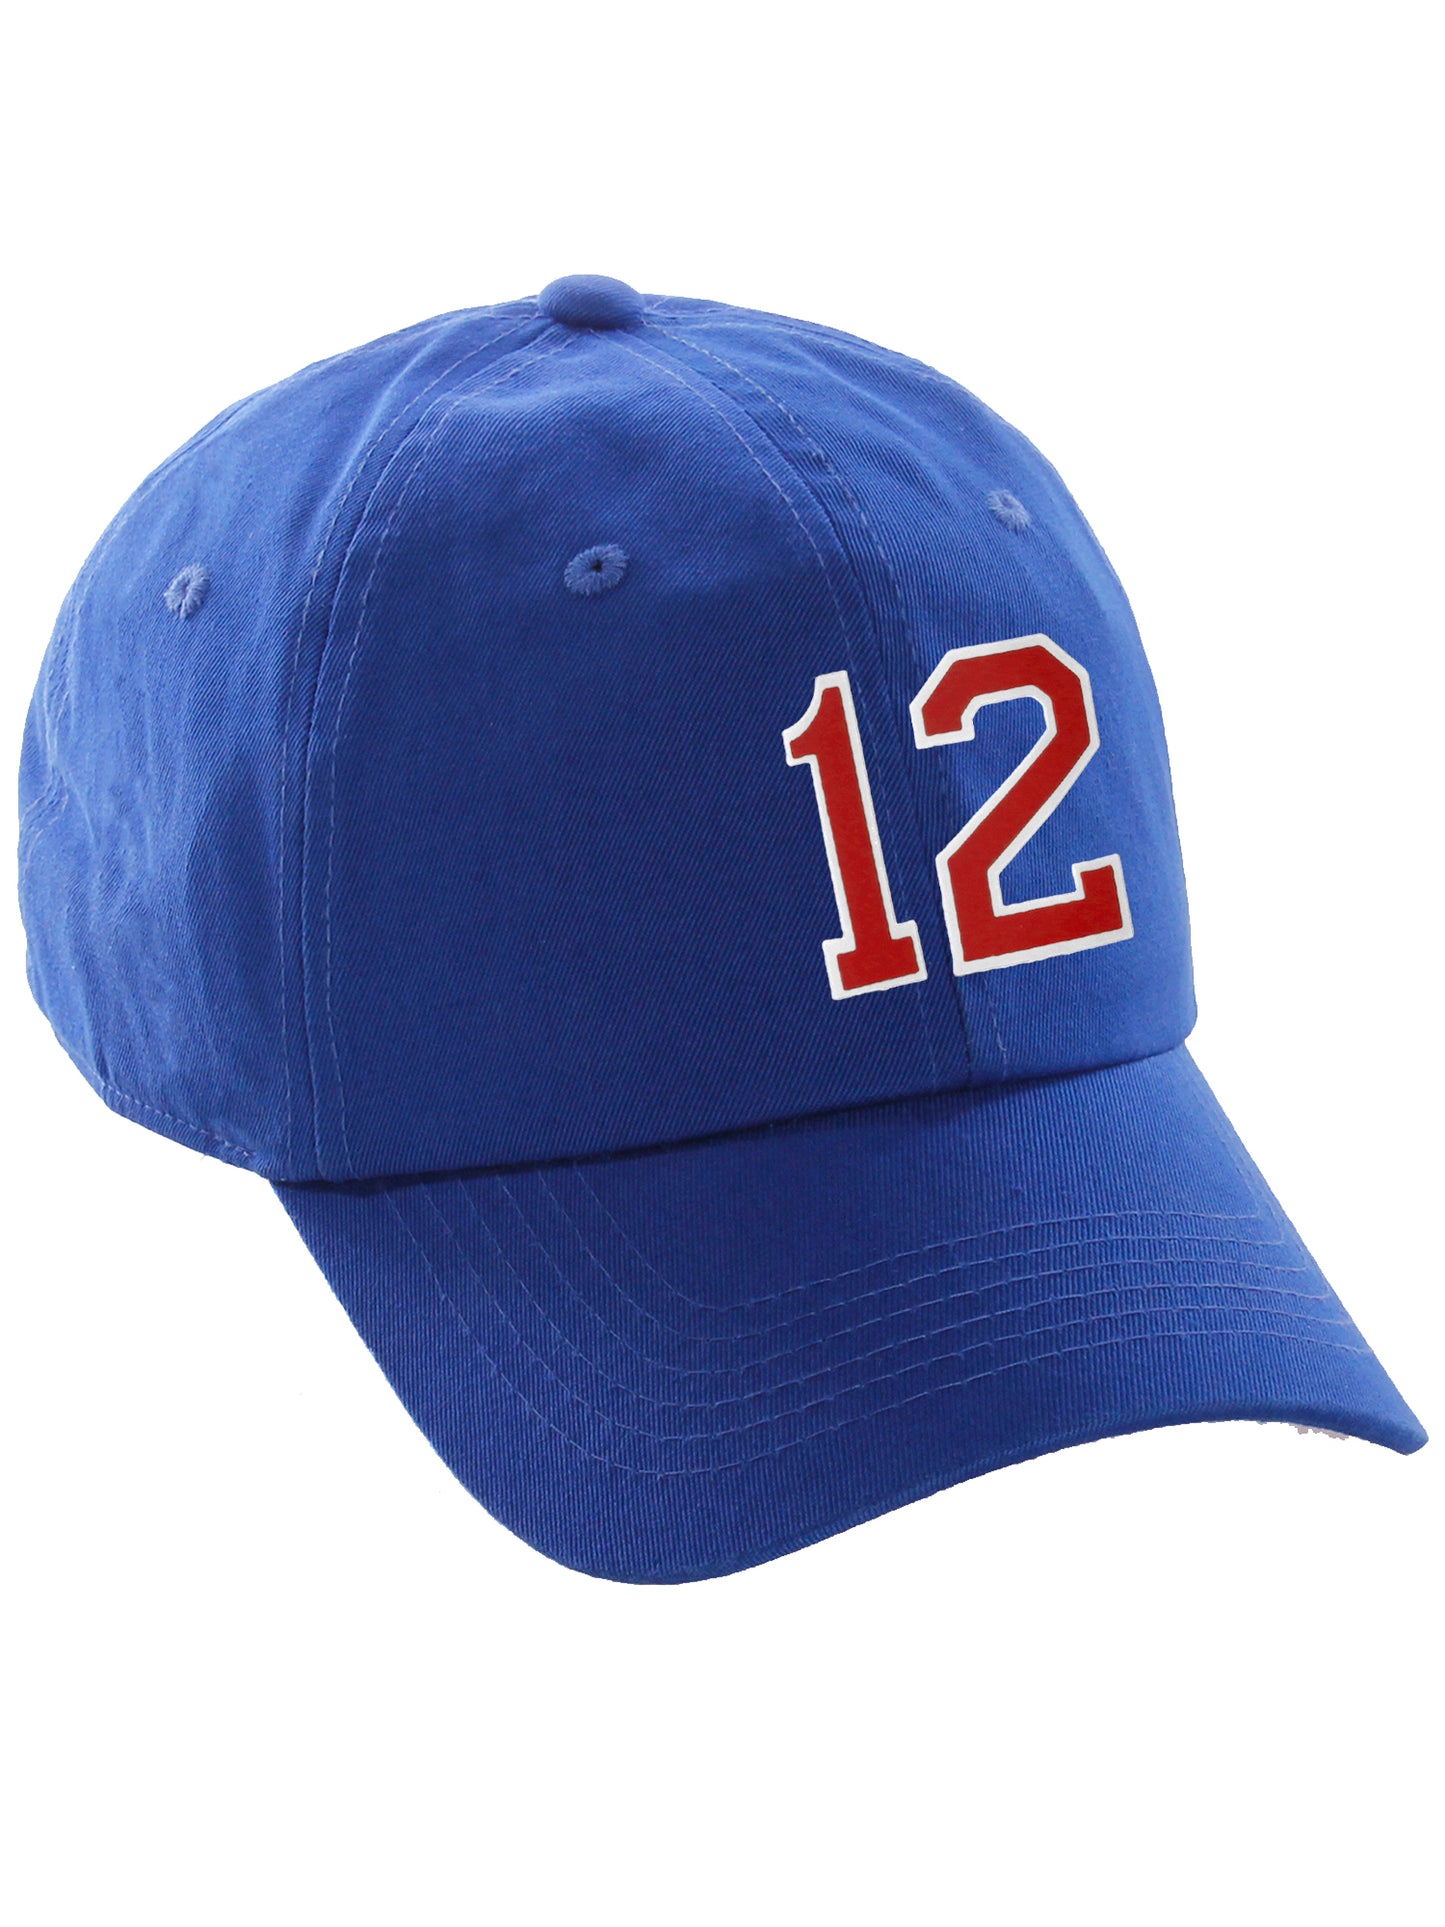 I&W Hatgear Customized Nunber Hat 00 to 99 Team Colors Baseball Cap, Blue Hat White Red